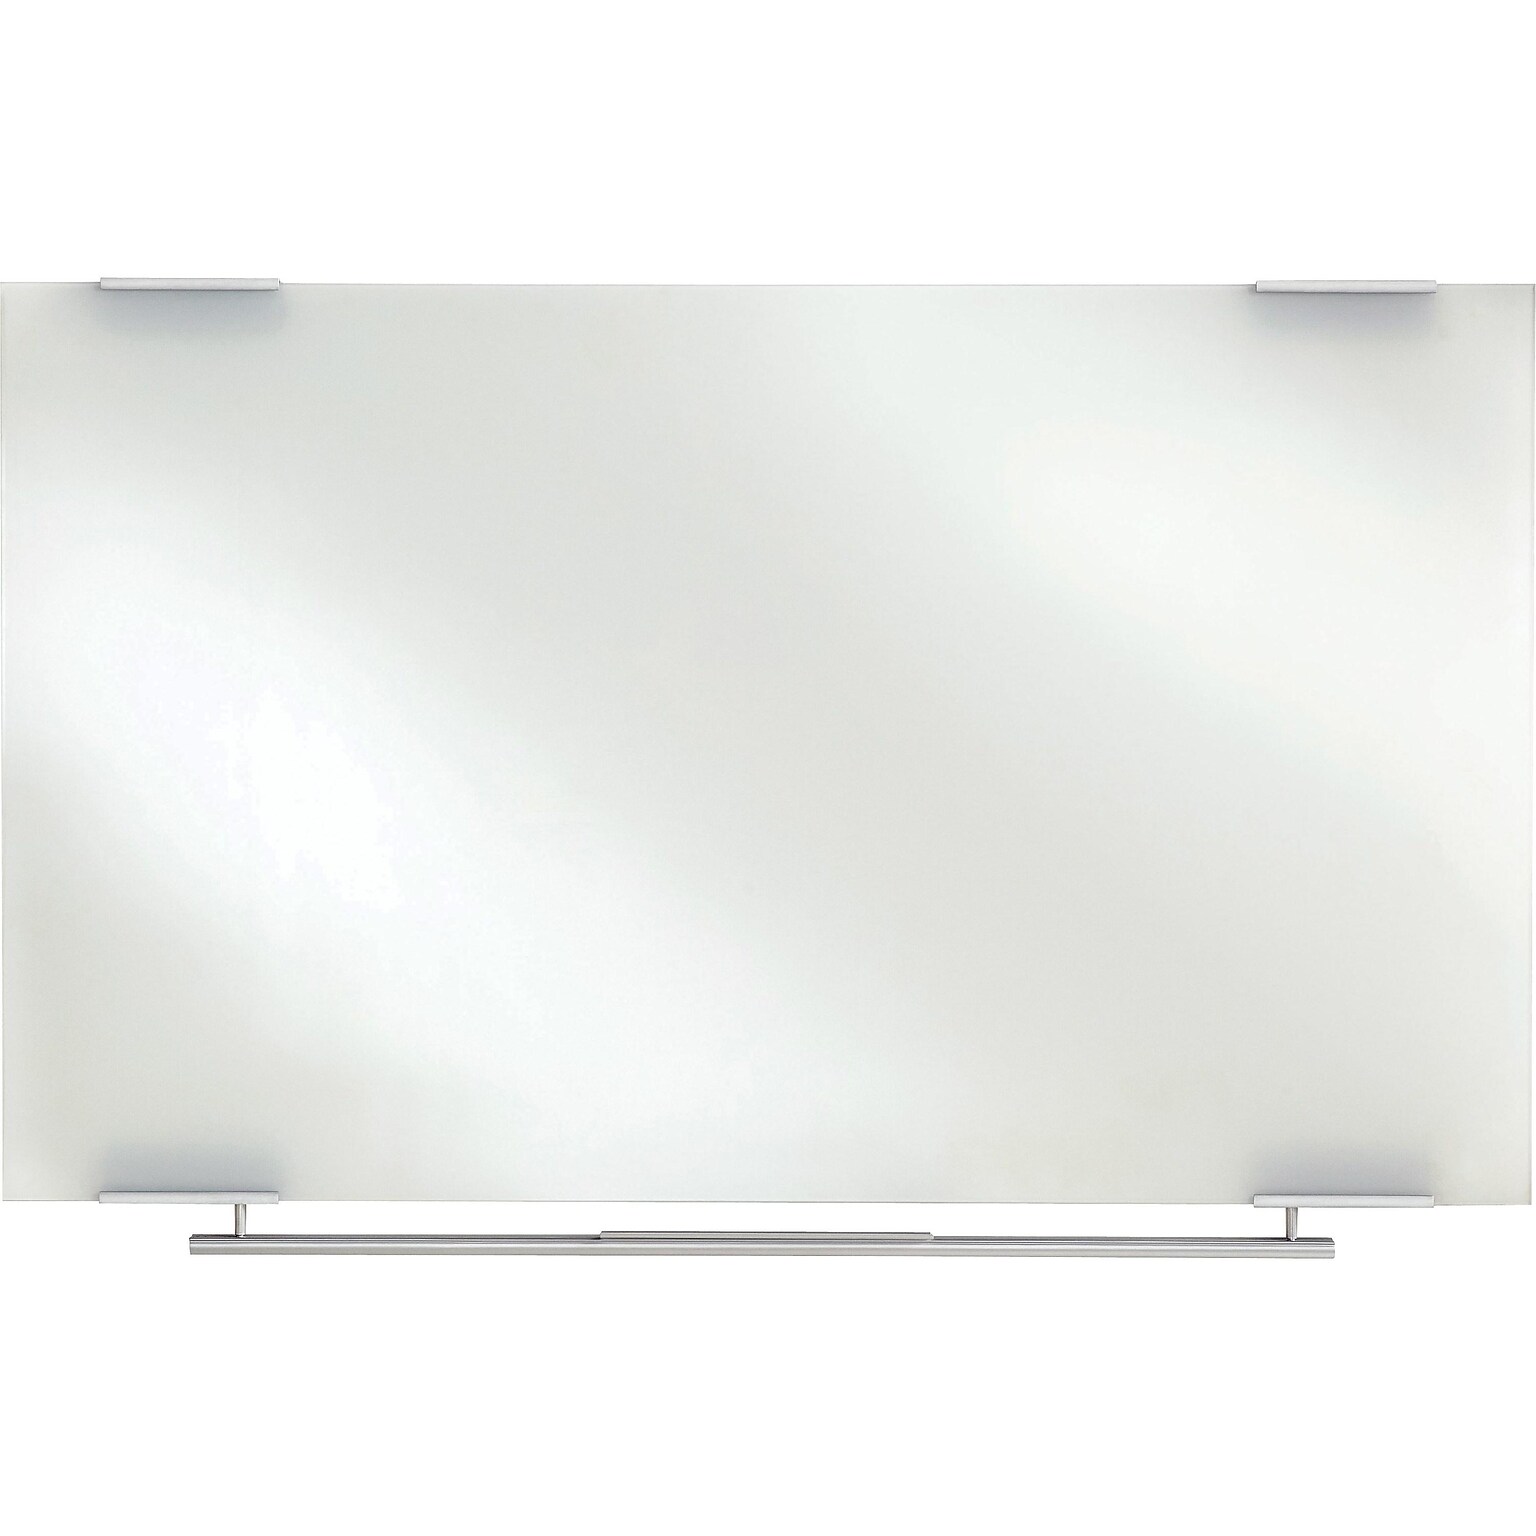 ICEBERG Clarity Glass Dry-Erase Whiteboard, 5 x 3 (31150)